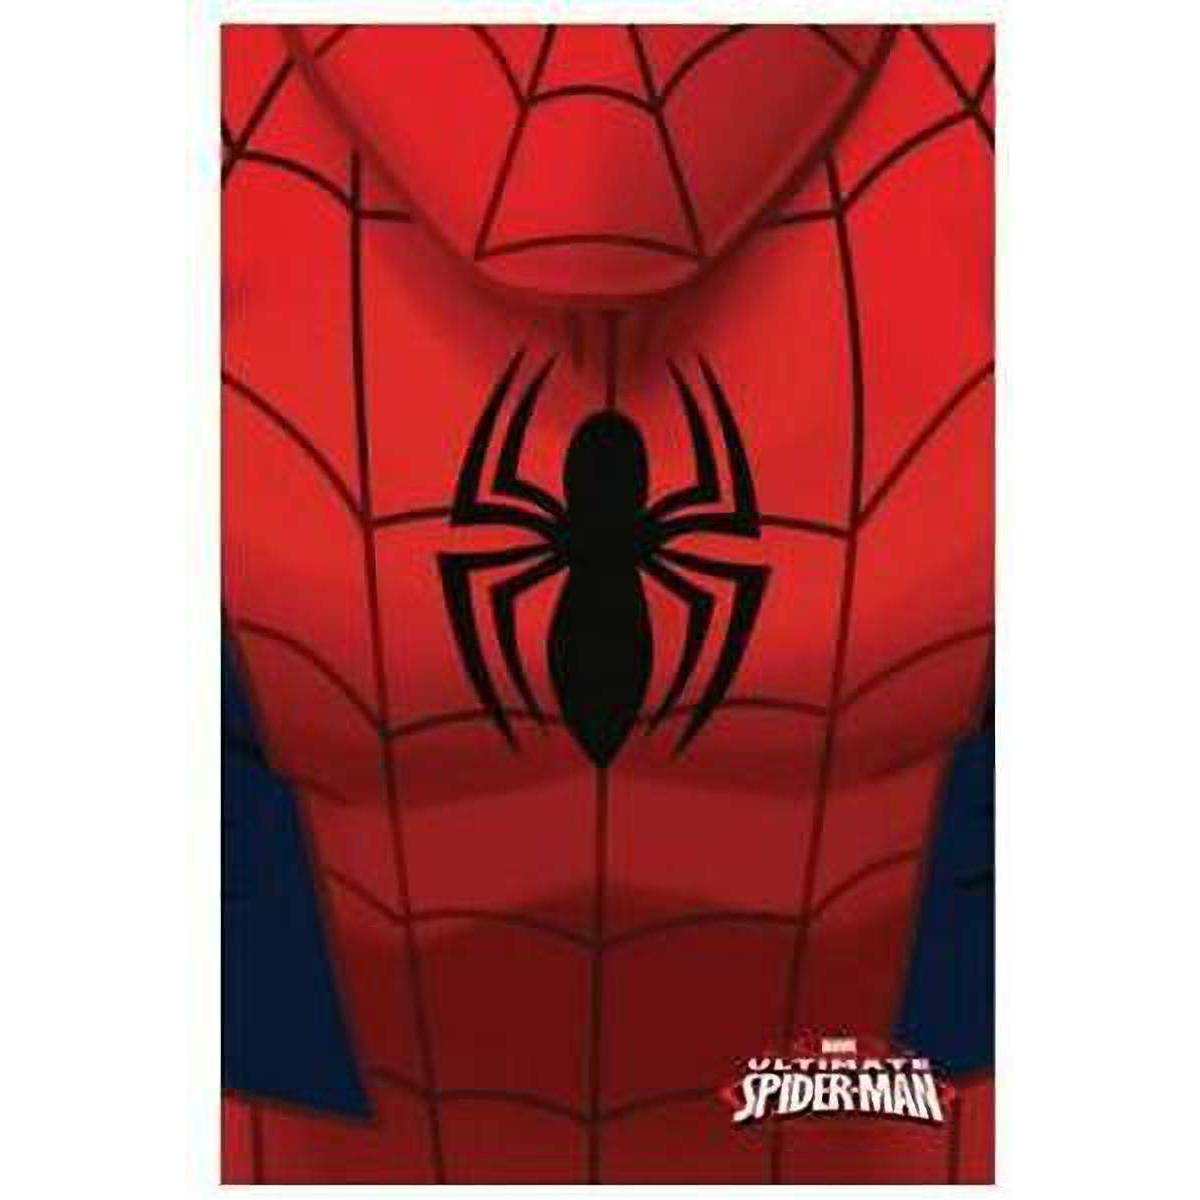 Plaid polaire Ultimate Spider-Man Rouge 100 x 150 cm